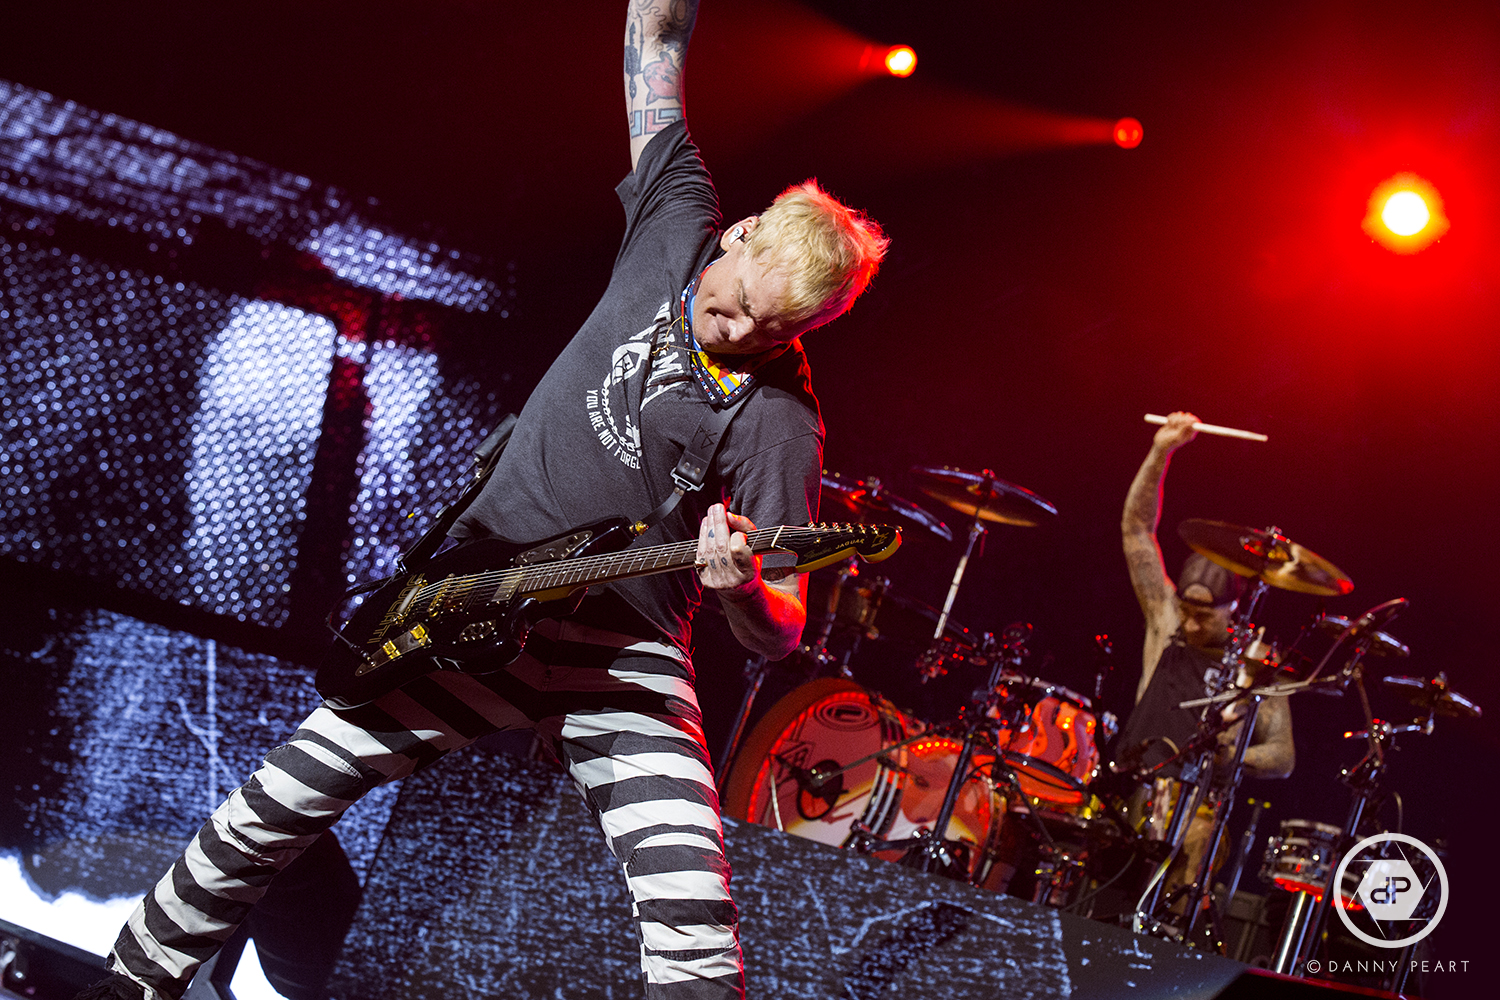 Live in Photos – Blink 182 – Leeds Arena - 05.07.17 - SOUNDCHECK - LIVE